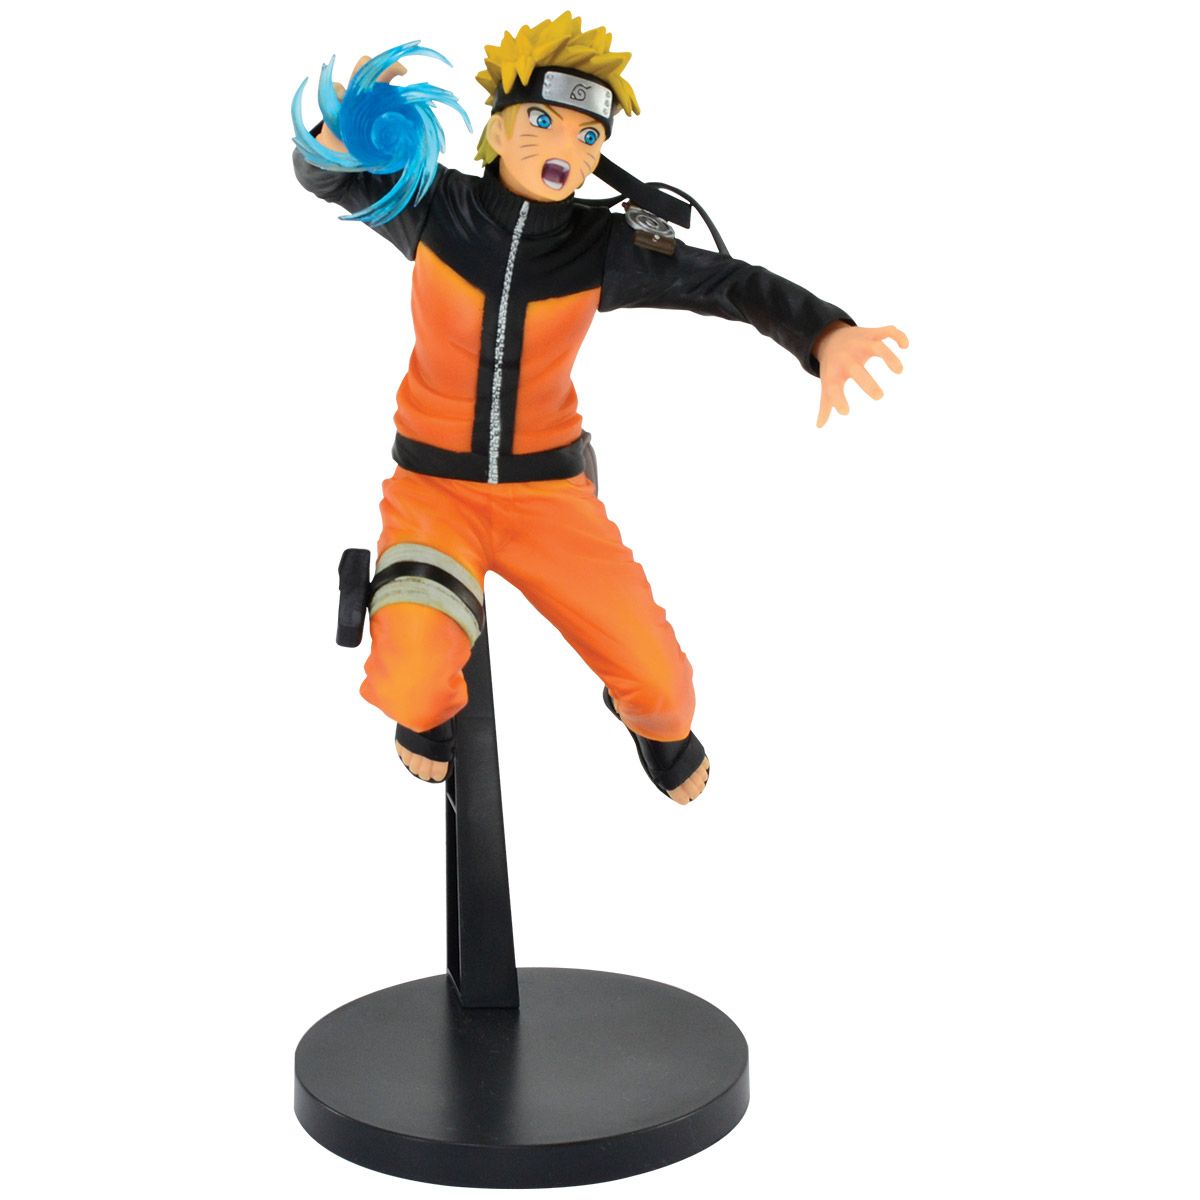 Estátua Naruto Uzumaki: Naruto Shippuden (Vibration Stars) - MKP